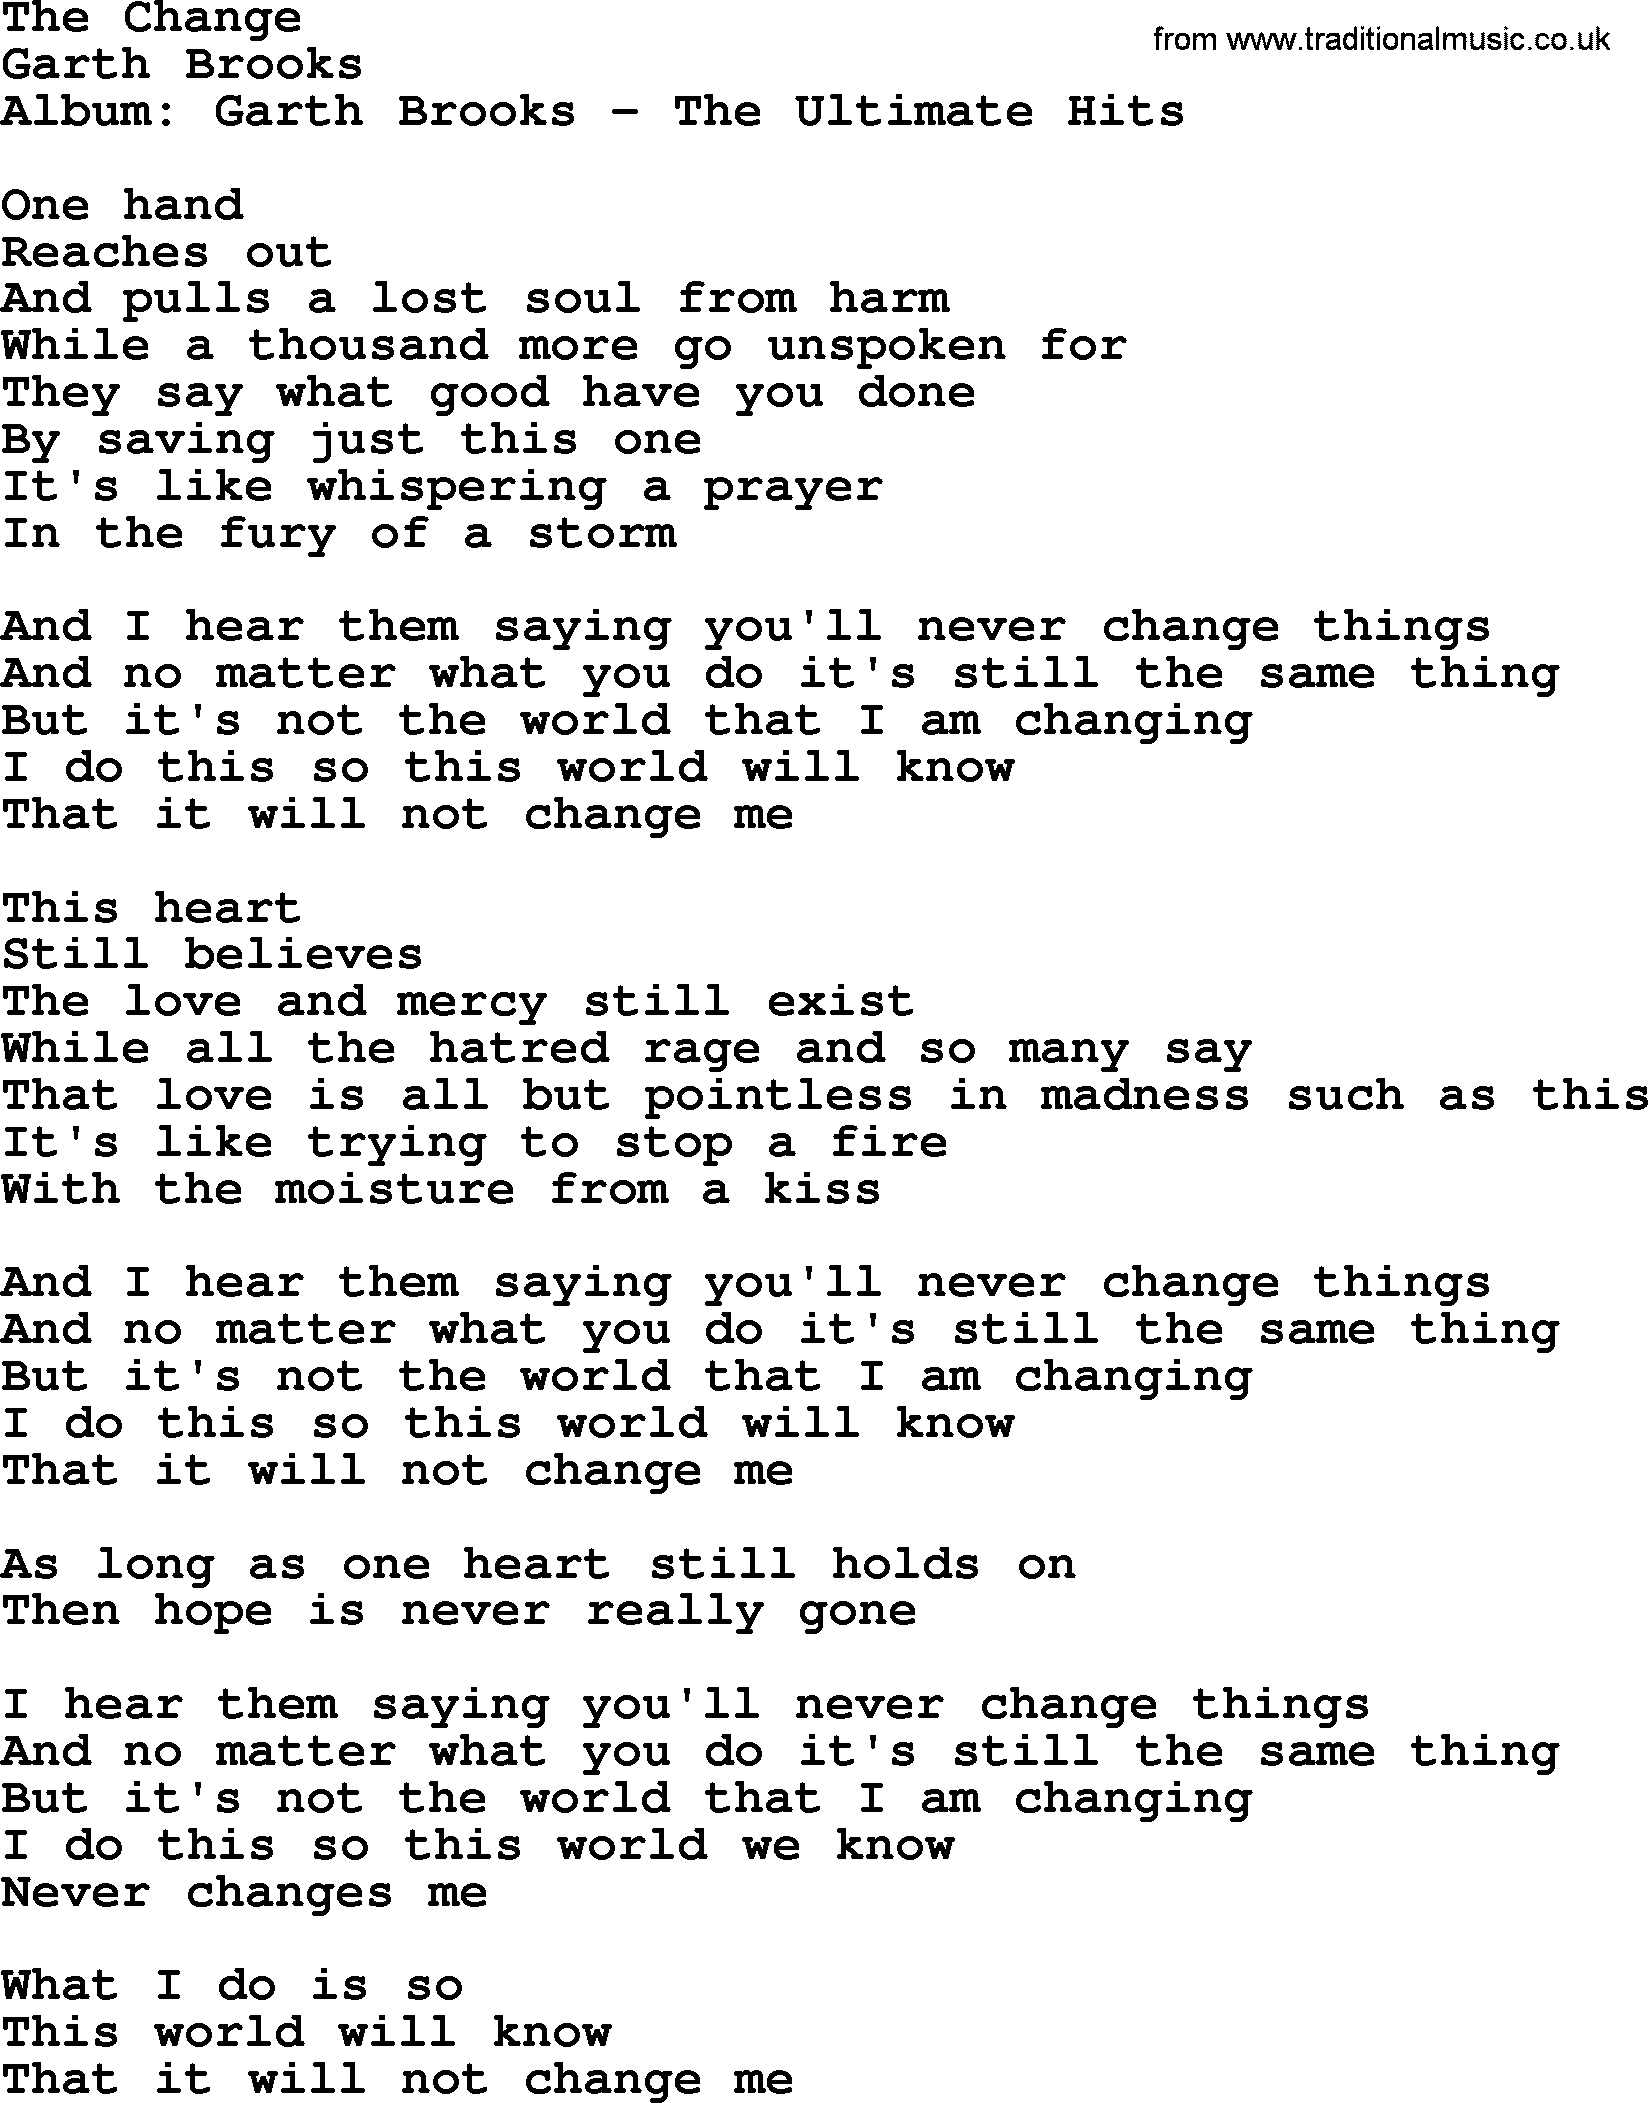 Garth Brooks song: The Change, lyrics